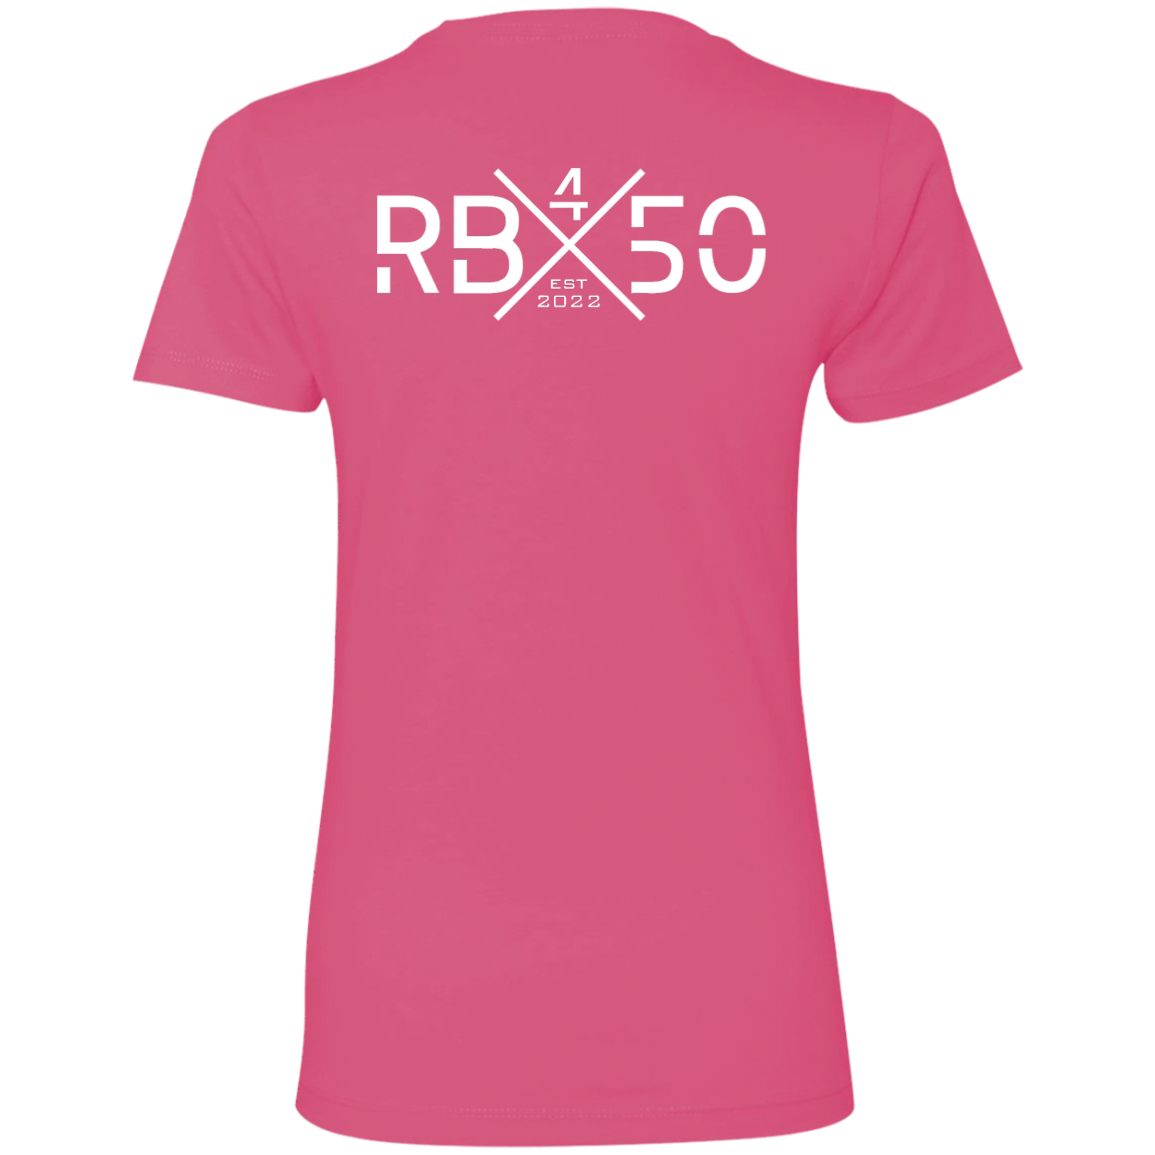 RB450 REAP Ladies' Boyfriend T-Shirt